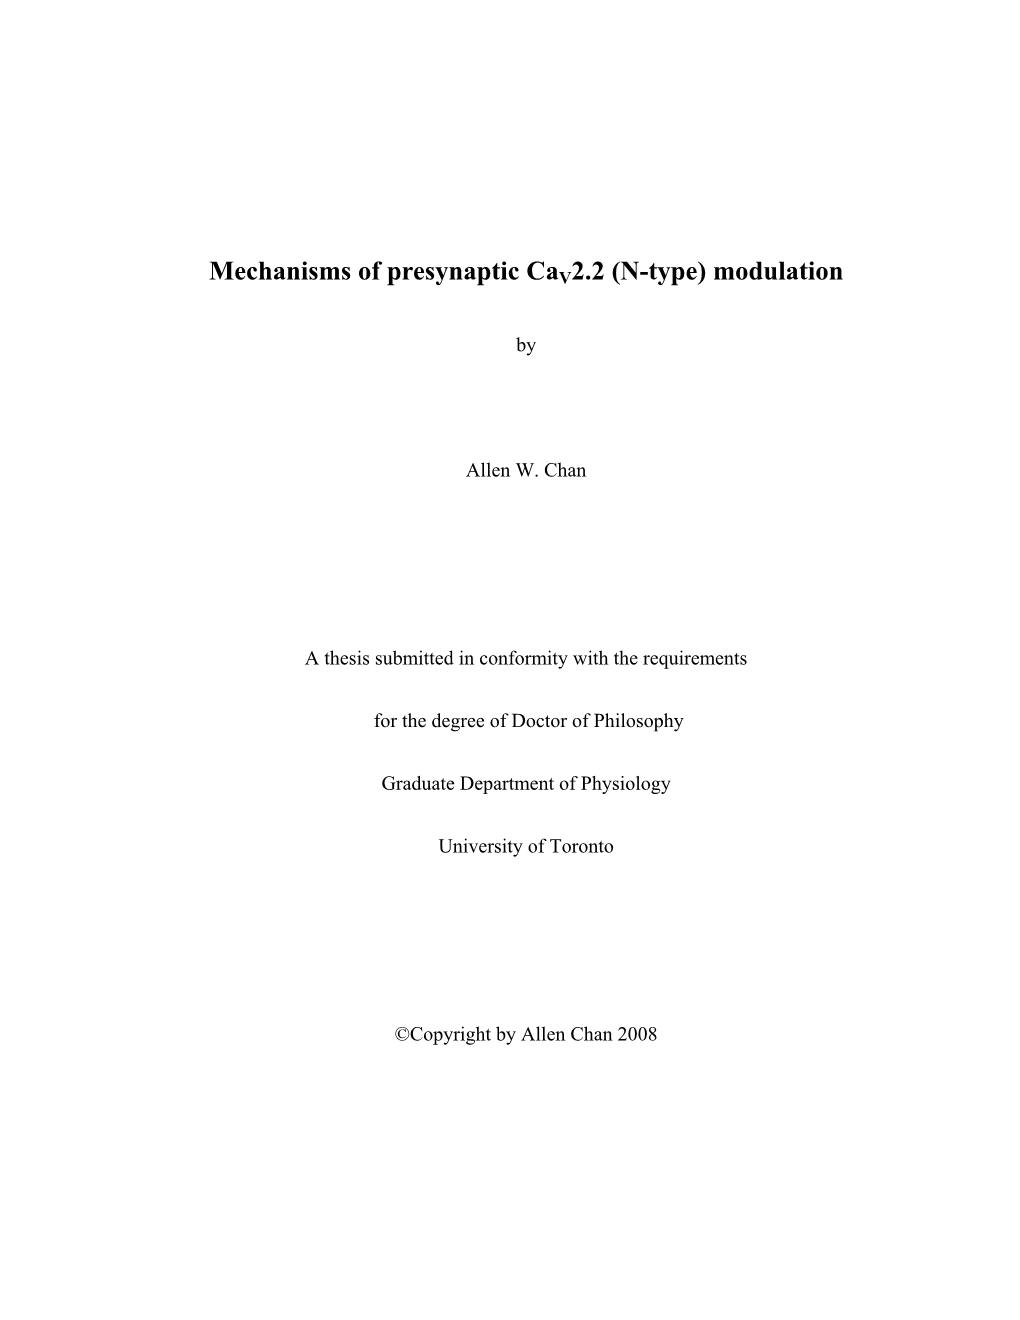 Mechanisms of Presynaptic Cav2.2 (N-Type) Modulation